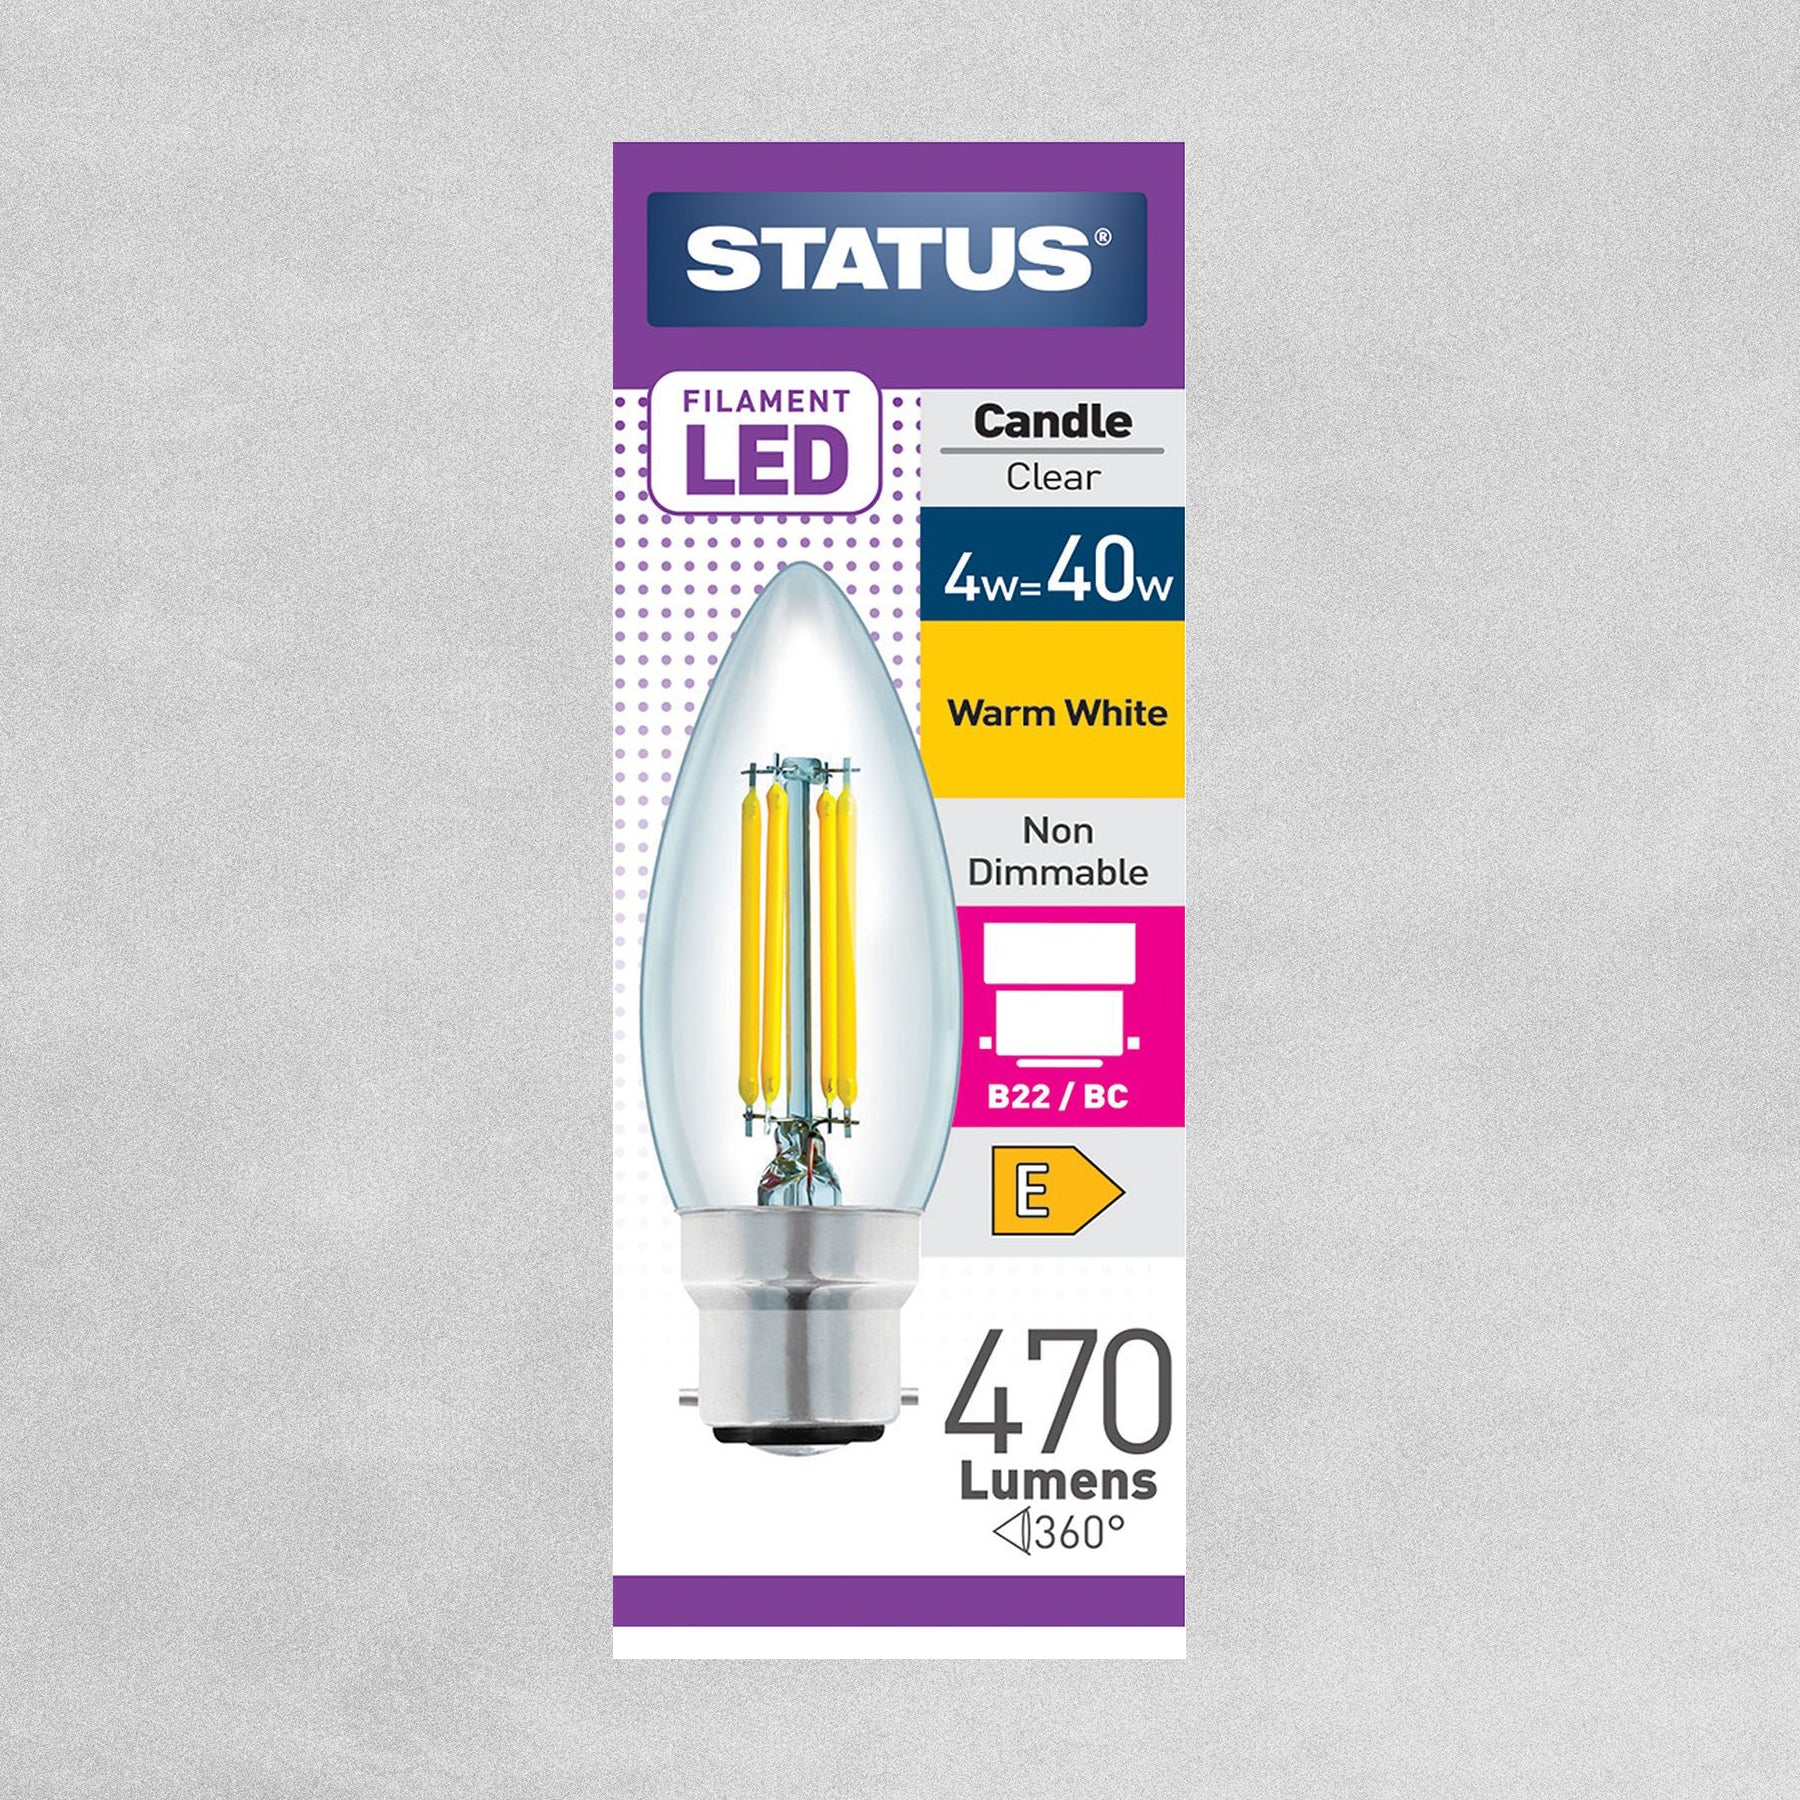 Status Filament LED Candle Clear Bulb B22/BC 4w=40w - Warm White